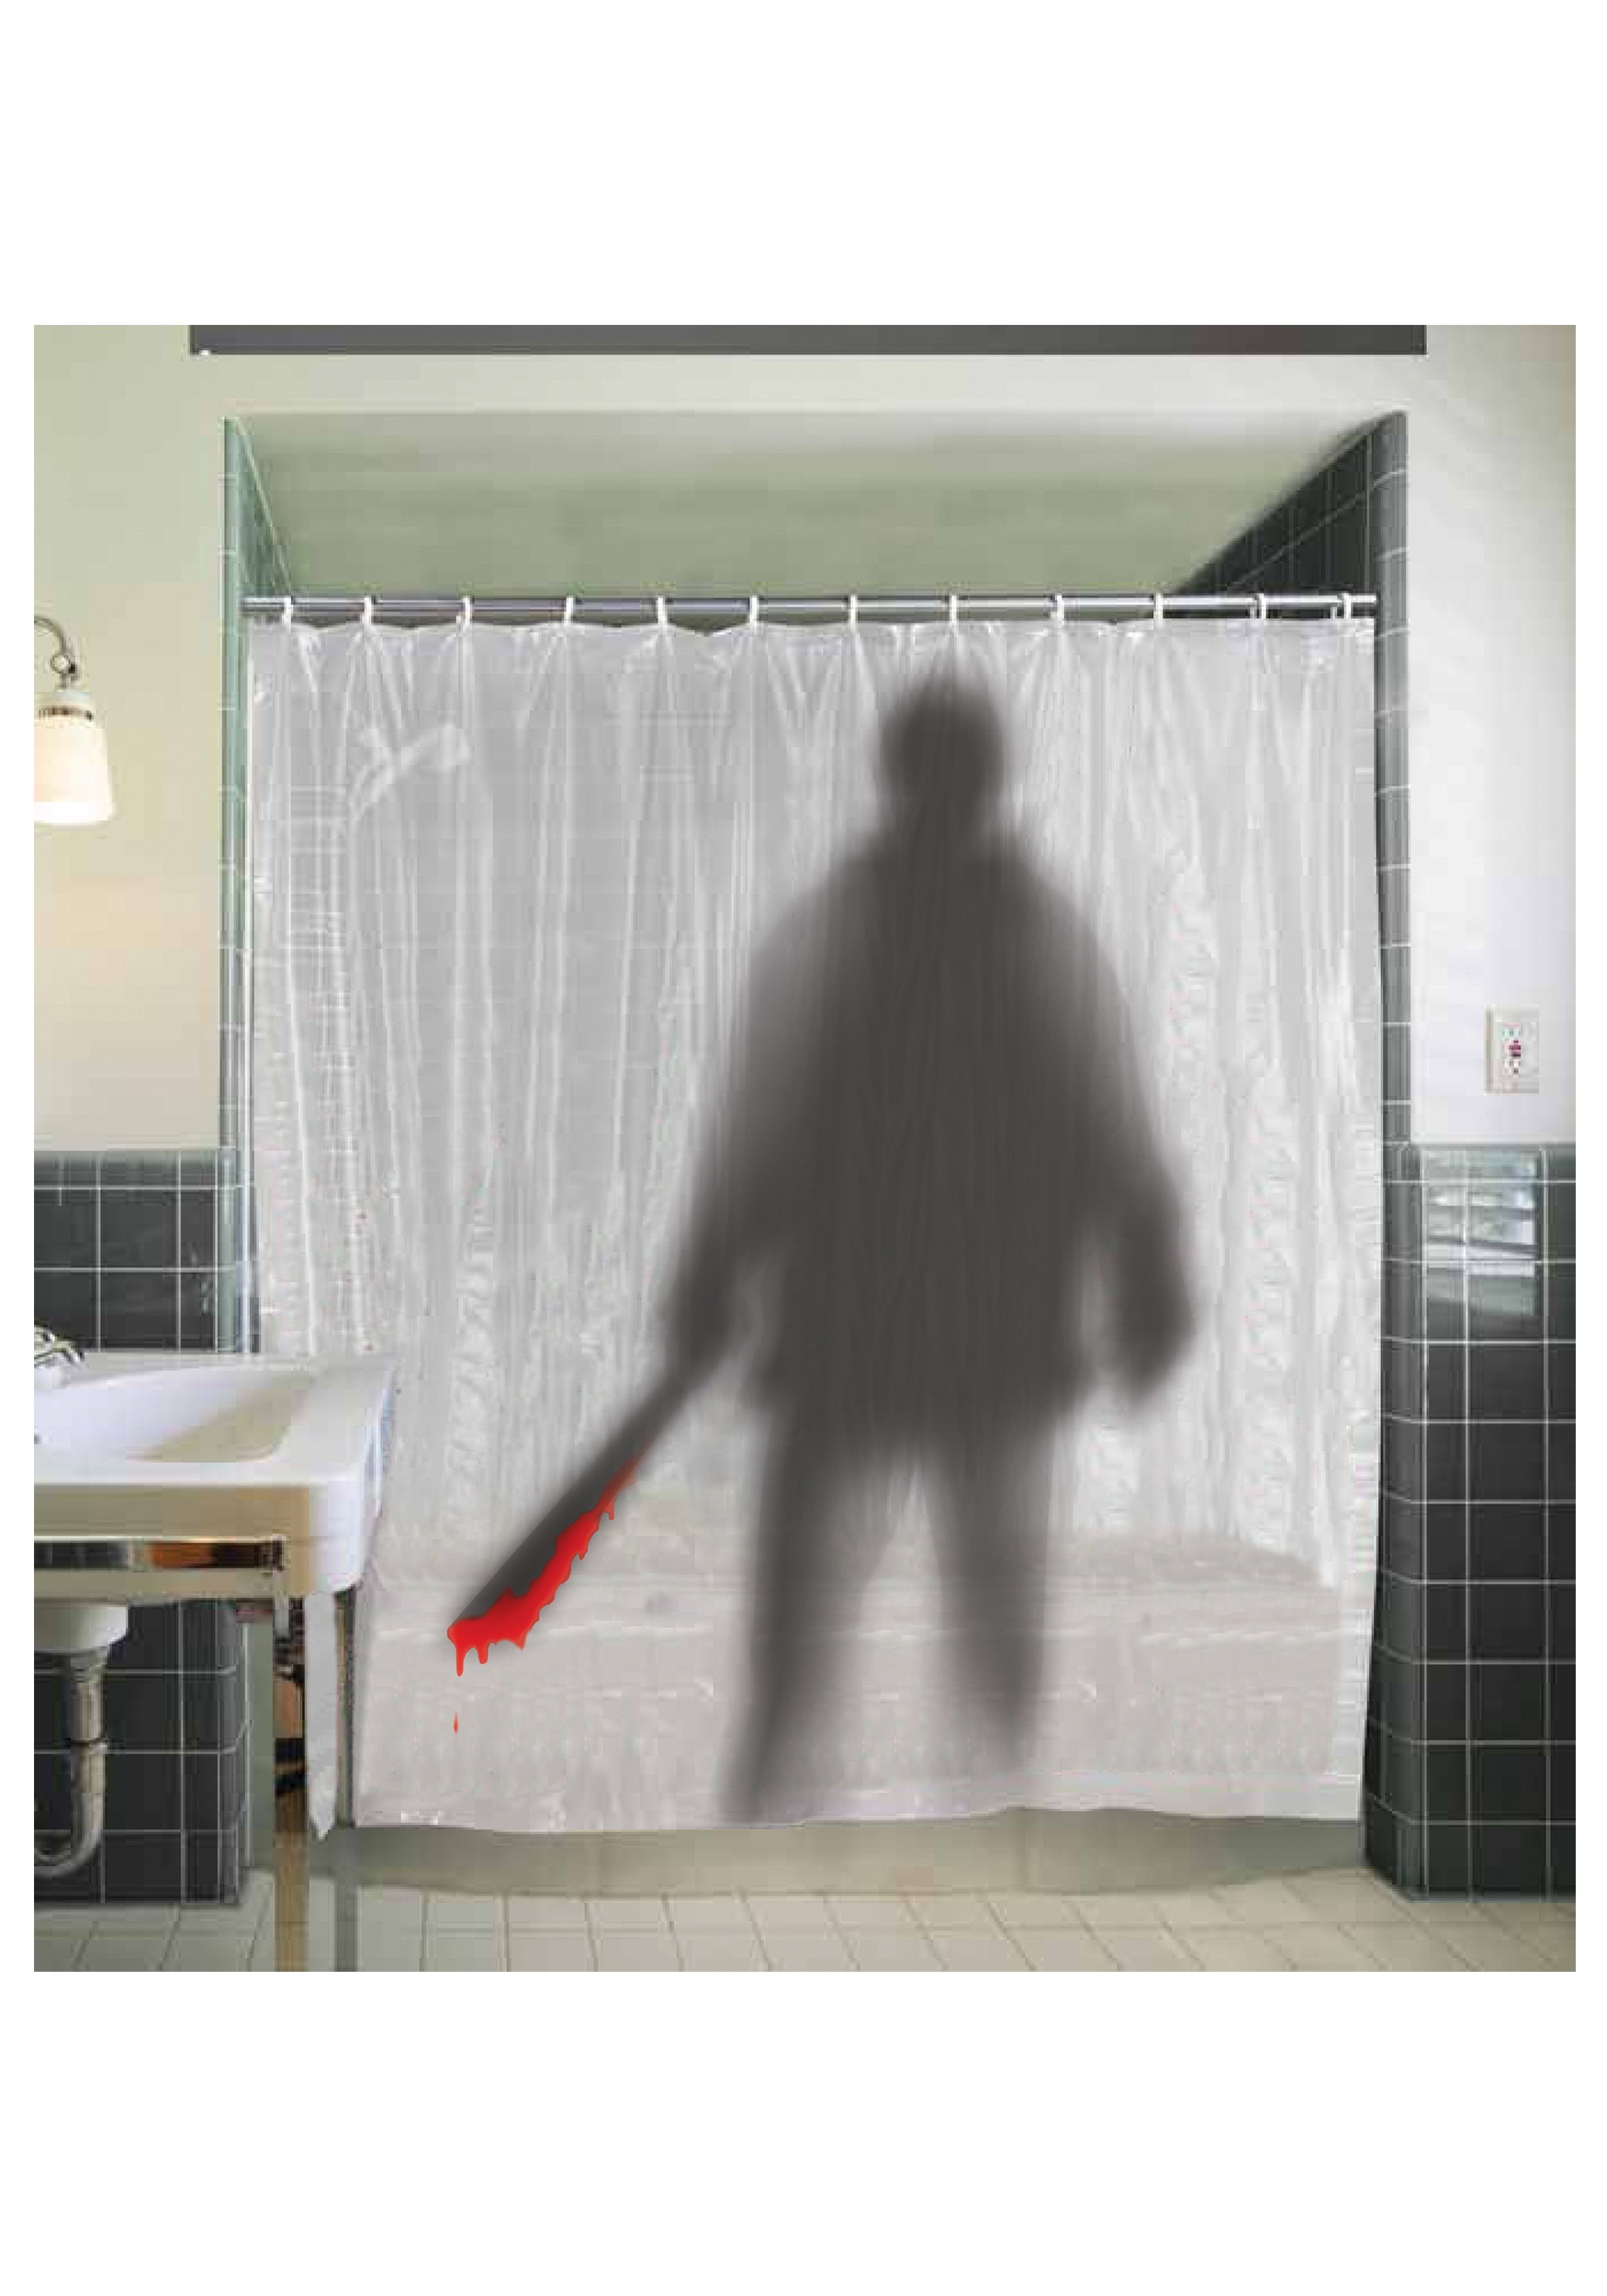 Machete Killer Shower Curtain